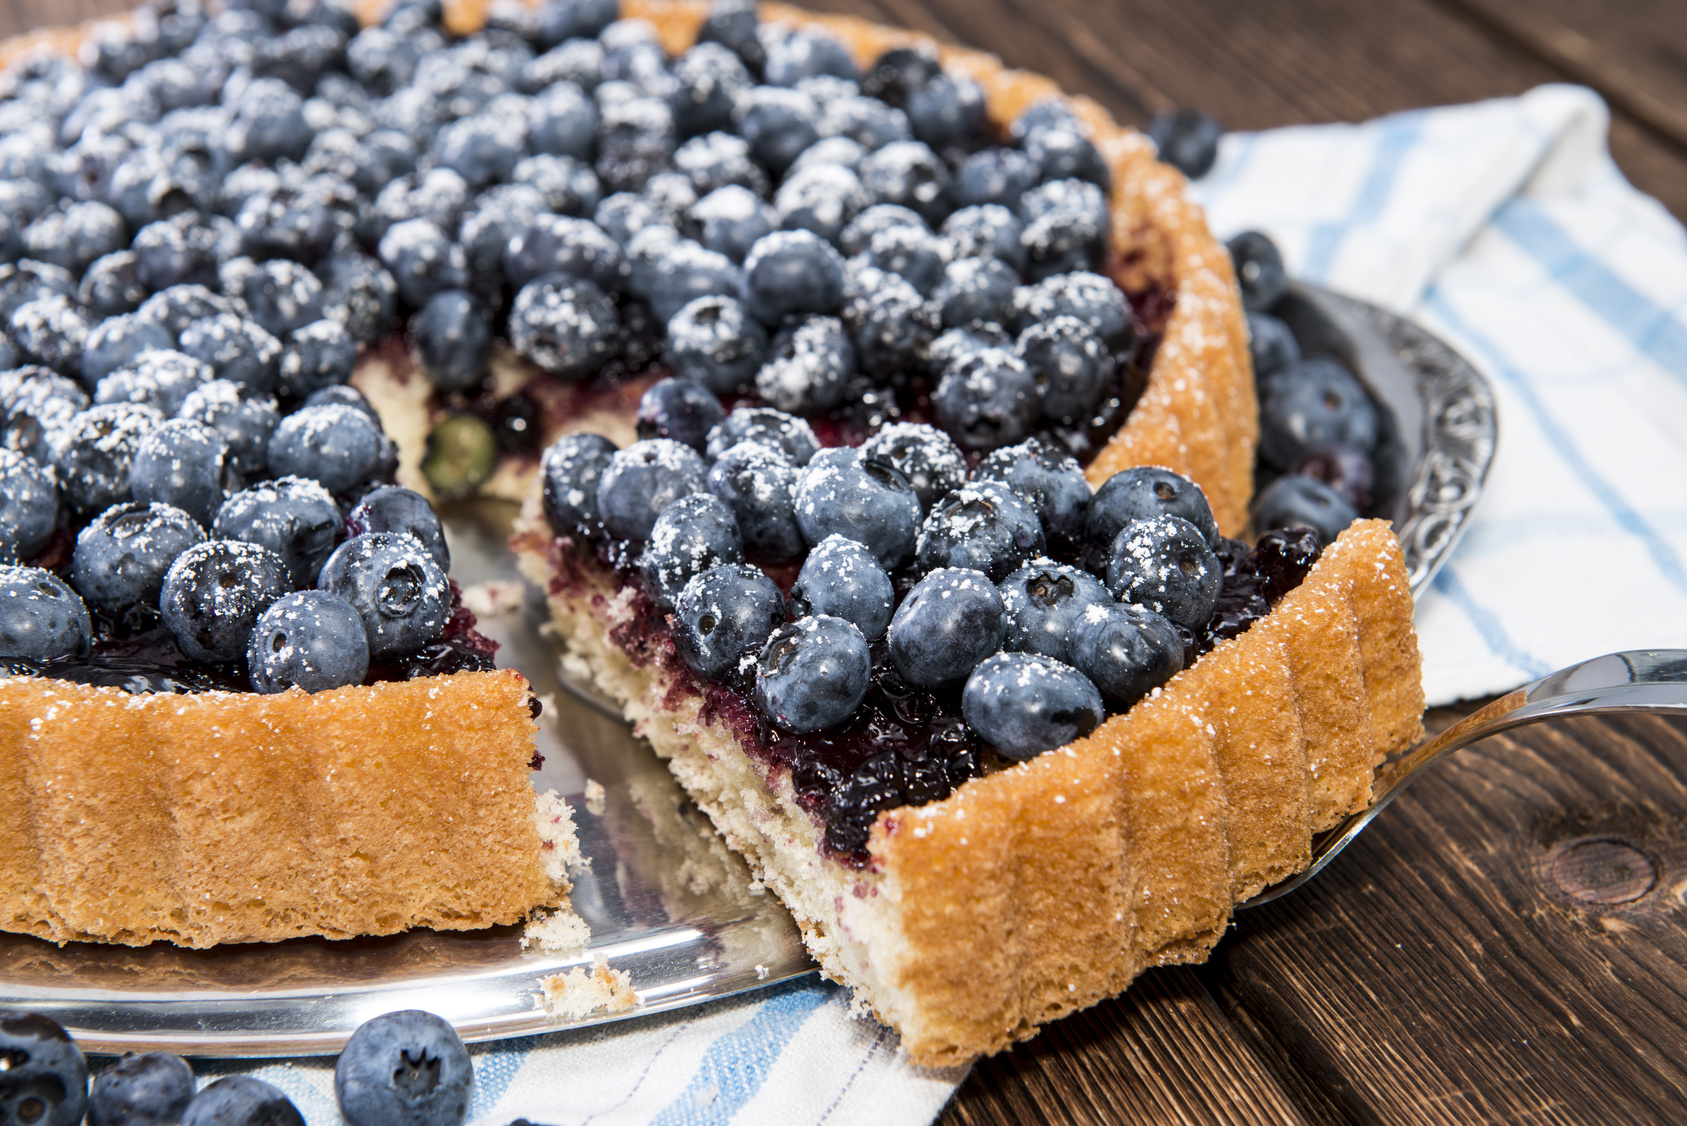 Delicious Blueberry Tart